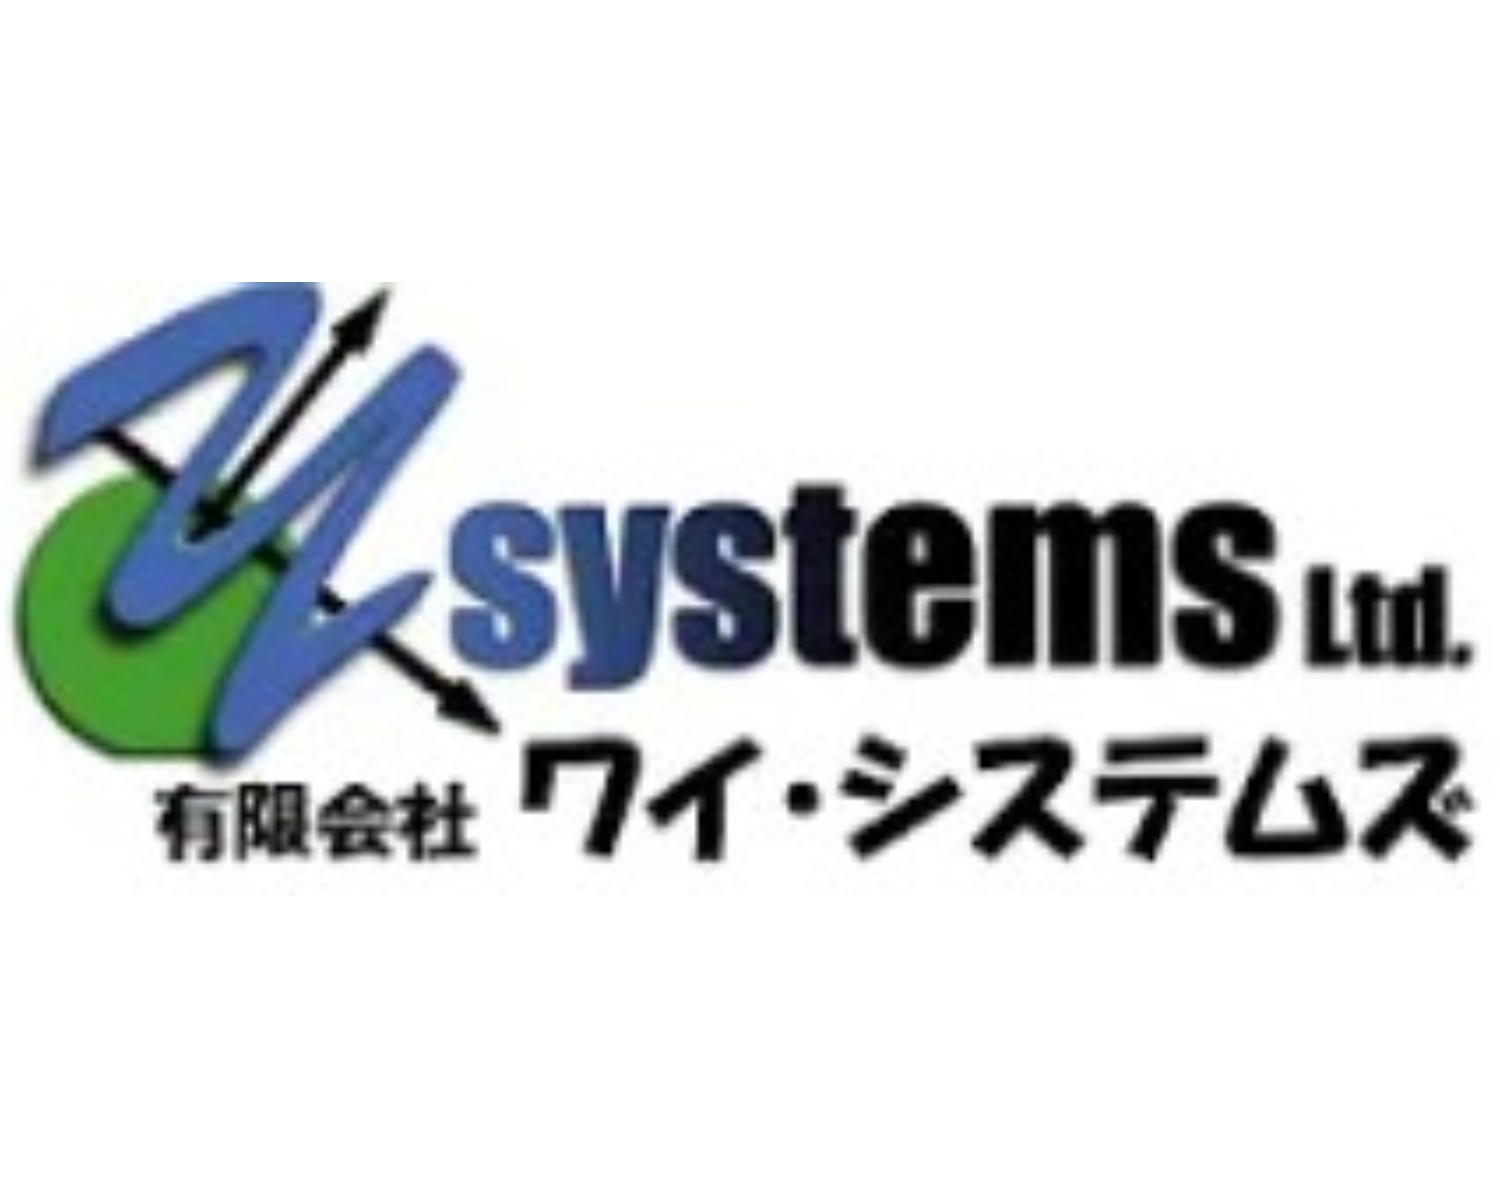 YSystems Ltd